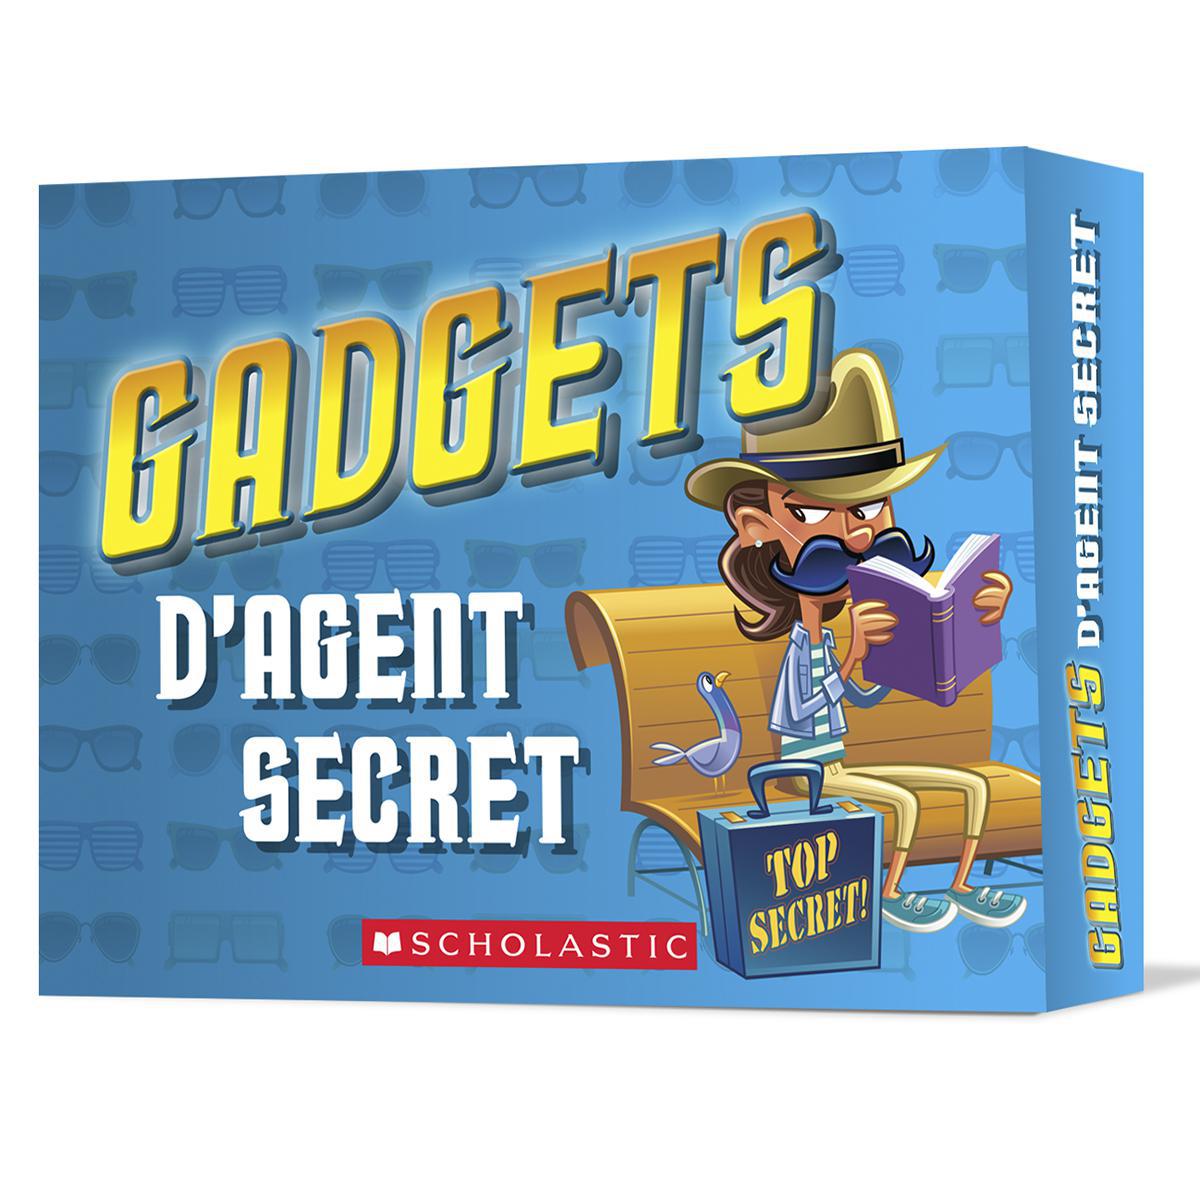  Gadgets d'agent secret 